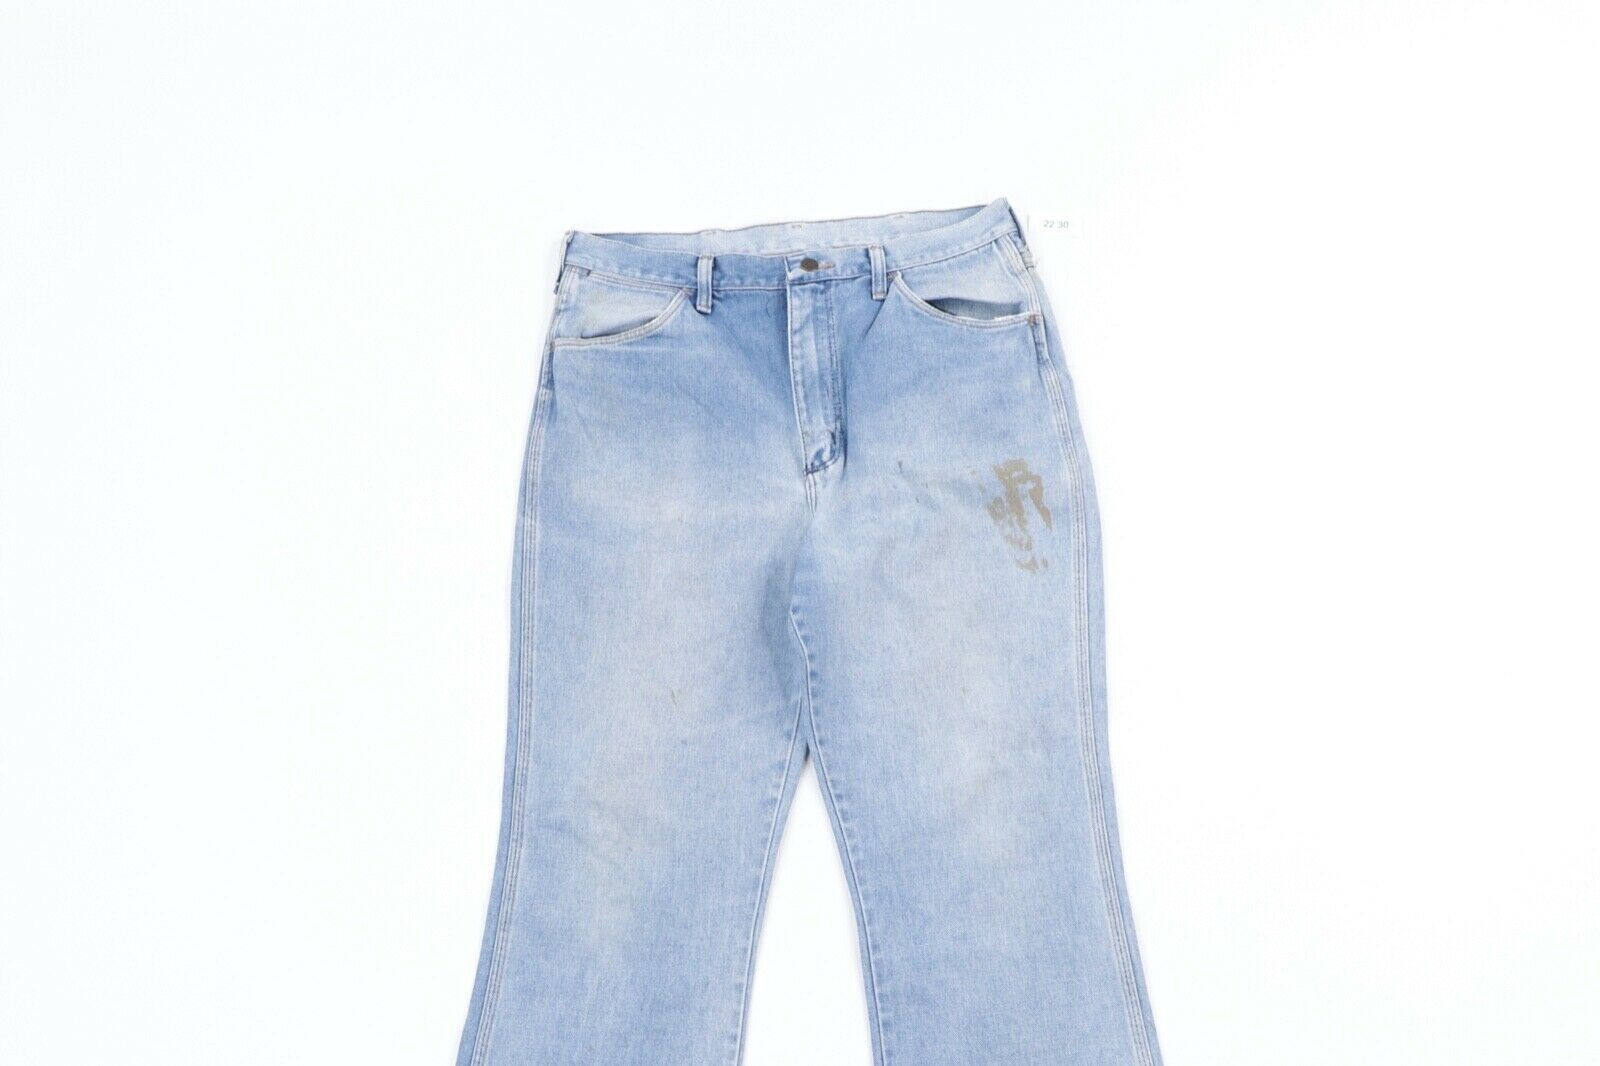 Vintage Vintage 80s Wrangler Bootcut Thrashed Jeans Blue 34x28 Size US 34 / EU 50 - 2 Preview